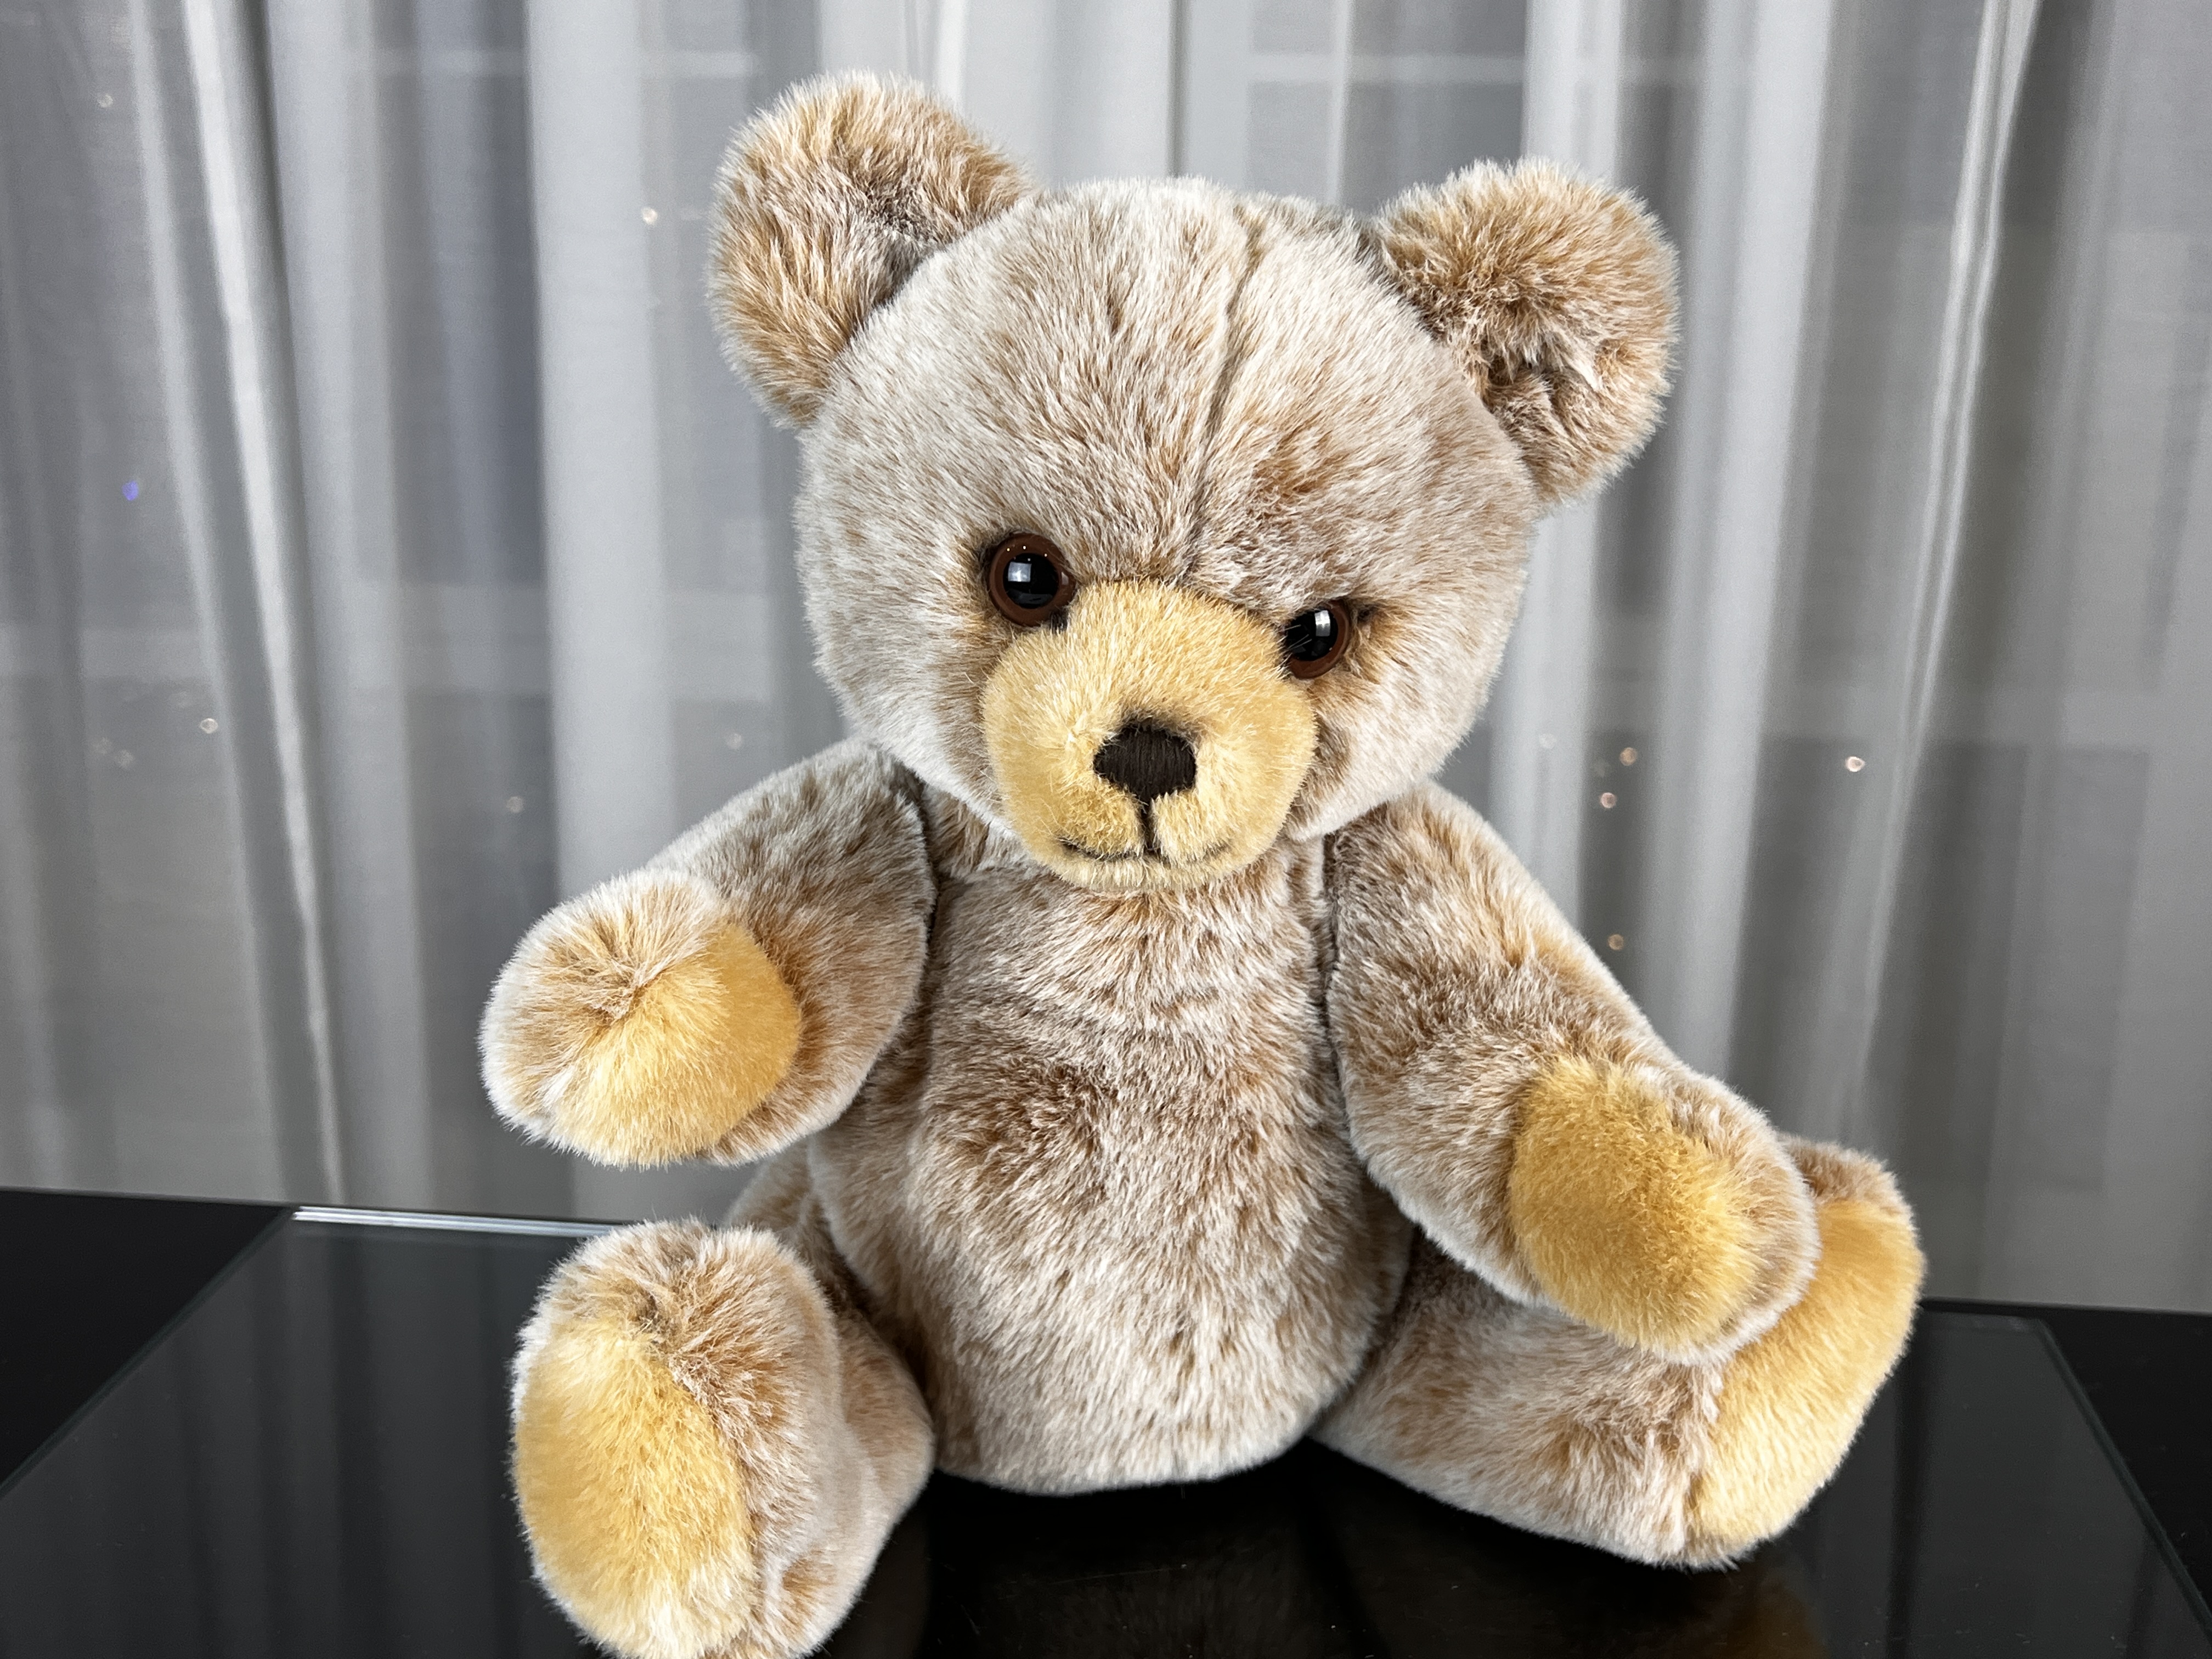  Steiff Tier Teddy Bär 36 cm. - Blanker Knopf & ohne Fahne - Top Zustand  